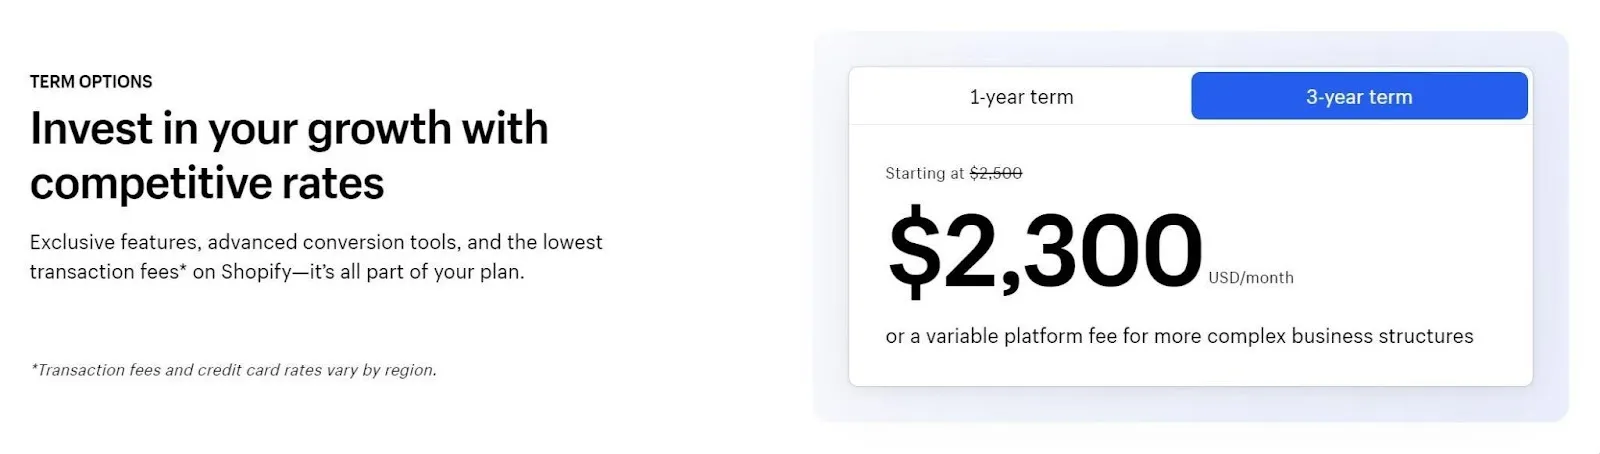 Shopify Plus pricing plan